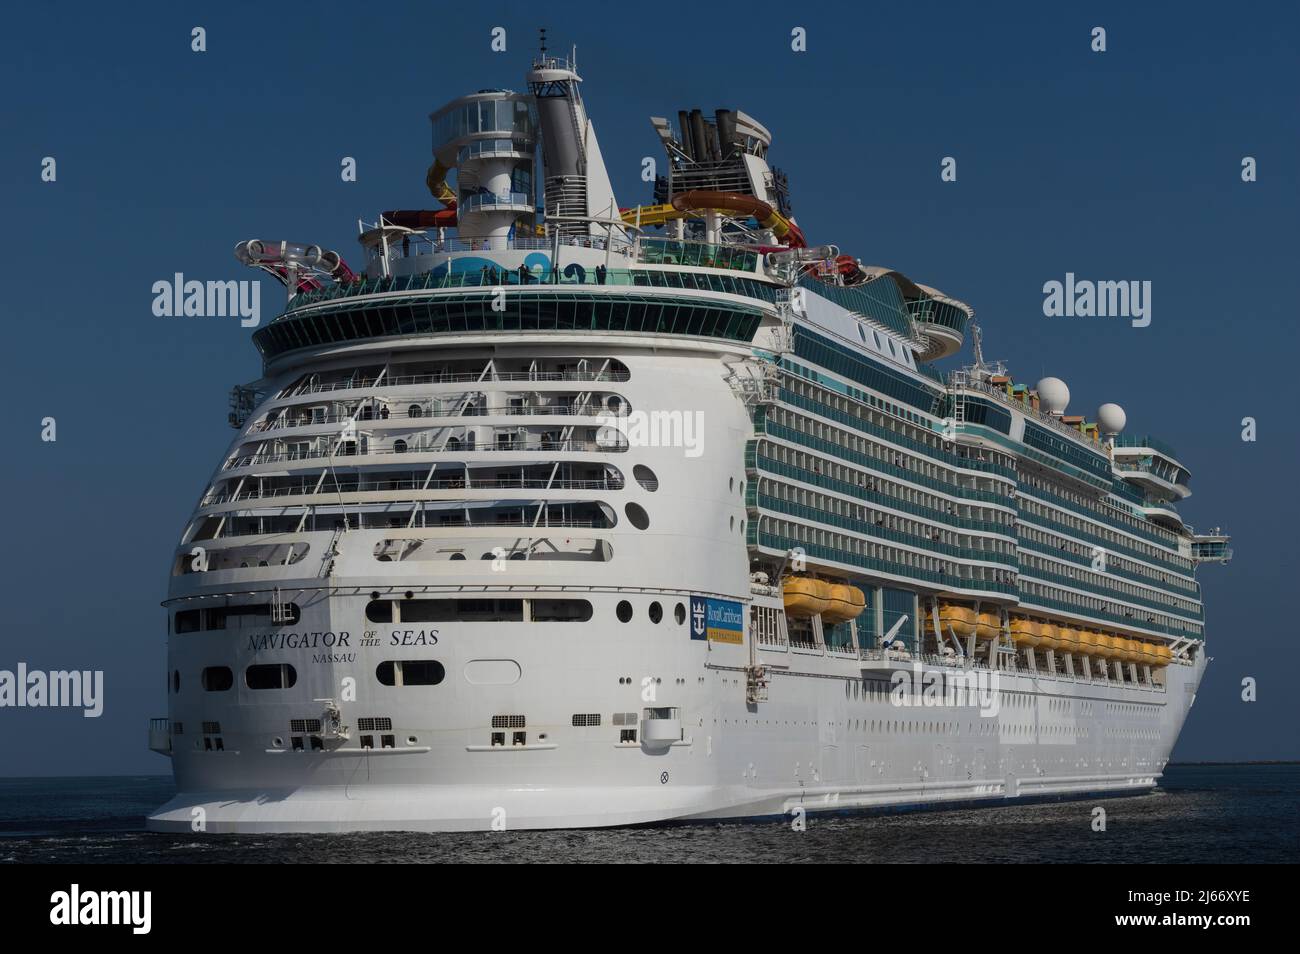 Port of Los Angeles, California, USA - April 27, 2022: image of Royal Caribbean cruise ship Navigator of the Seas shown leaving the port. Stock Photo